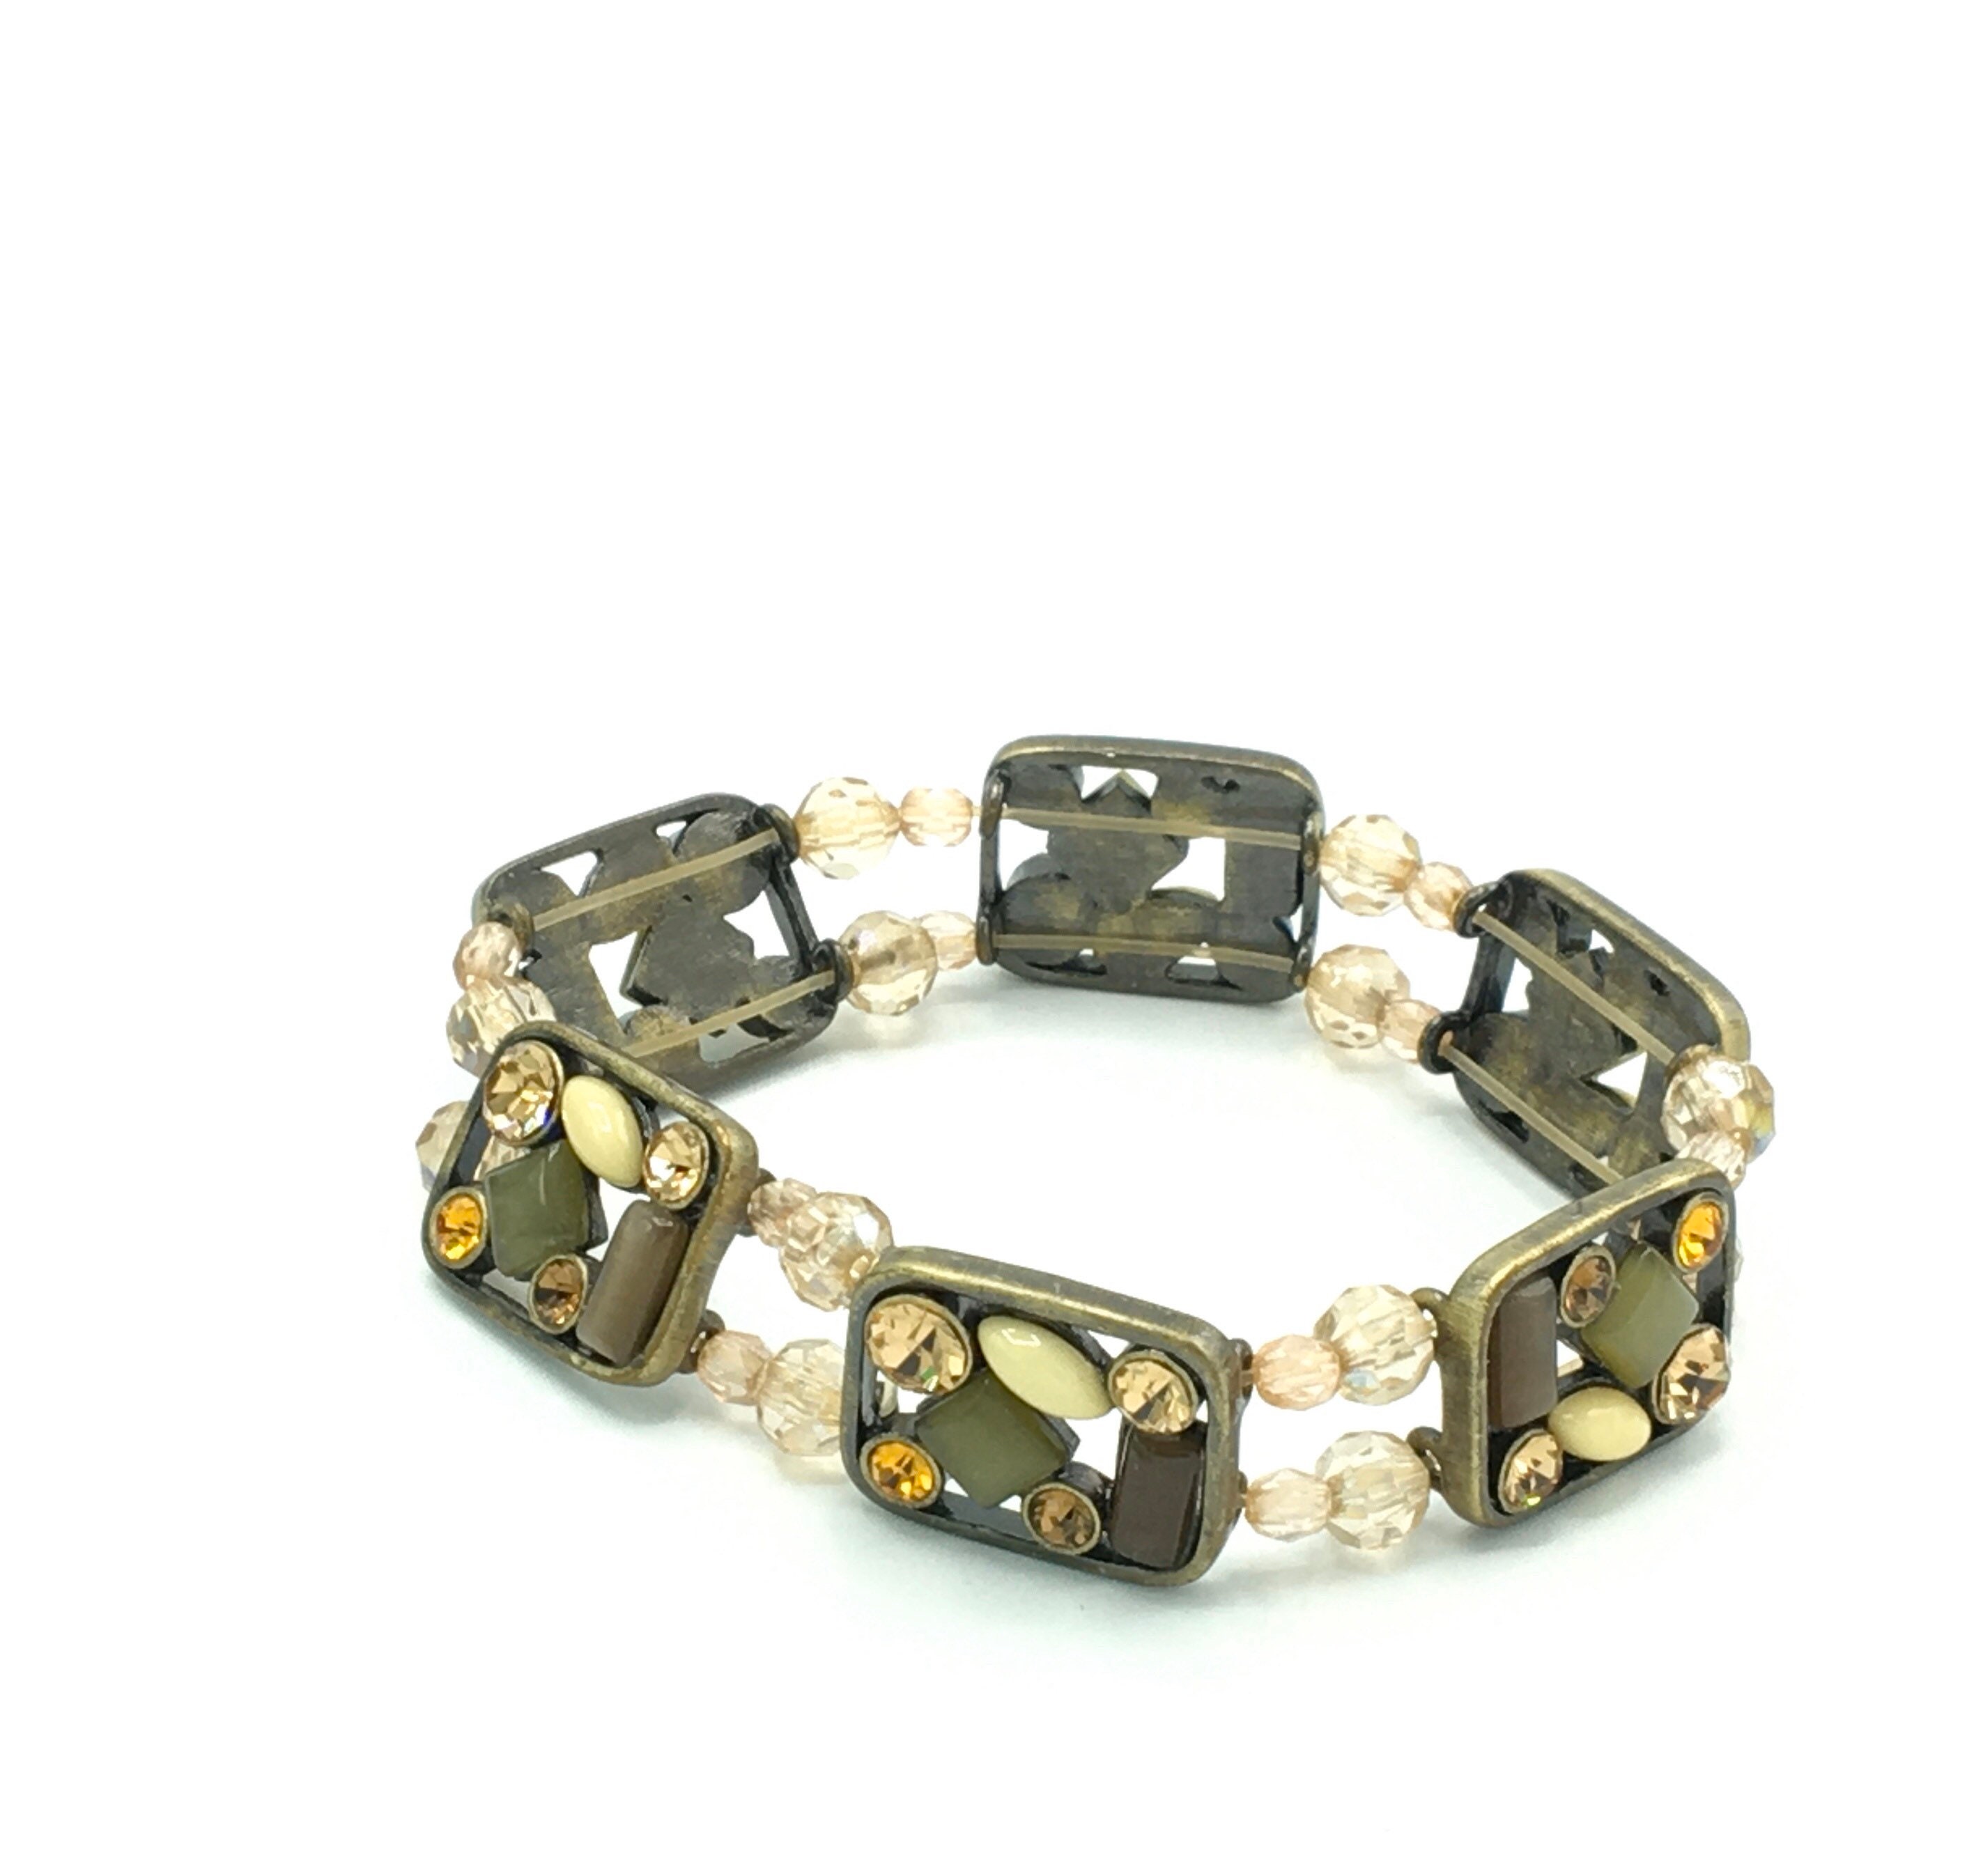 Multicolored Crystals/stones/beads Bracelet by Lia Sophia - Etsy